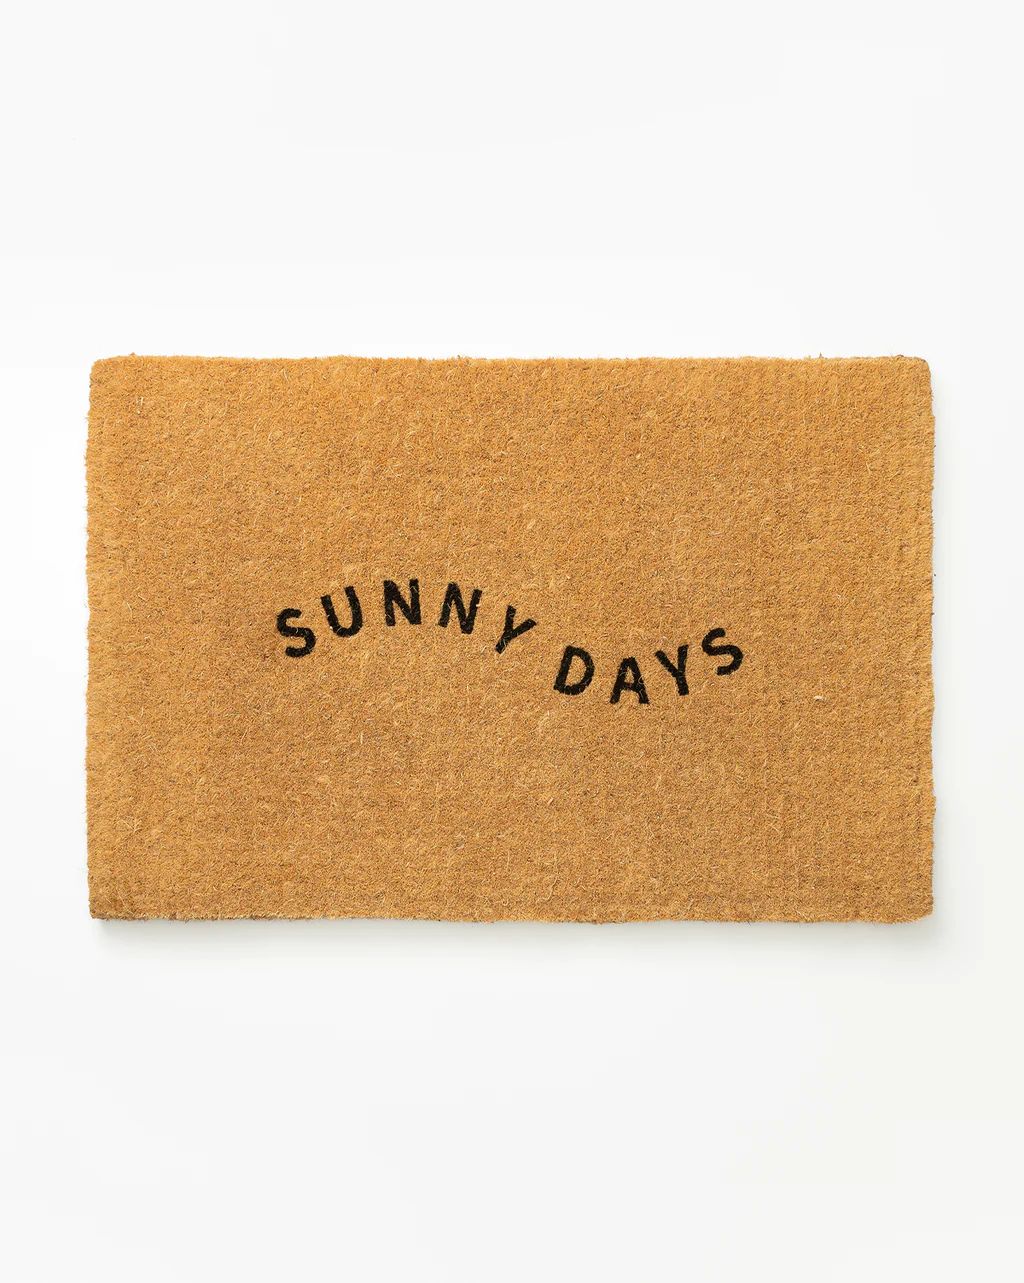 Sunny Days Doormat | McGee & Co.